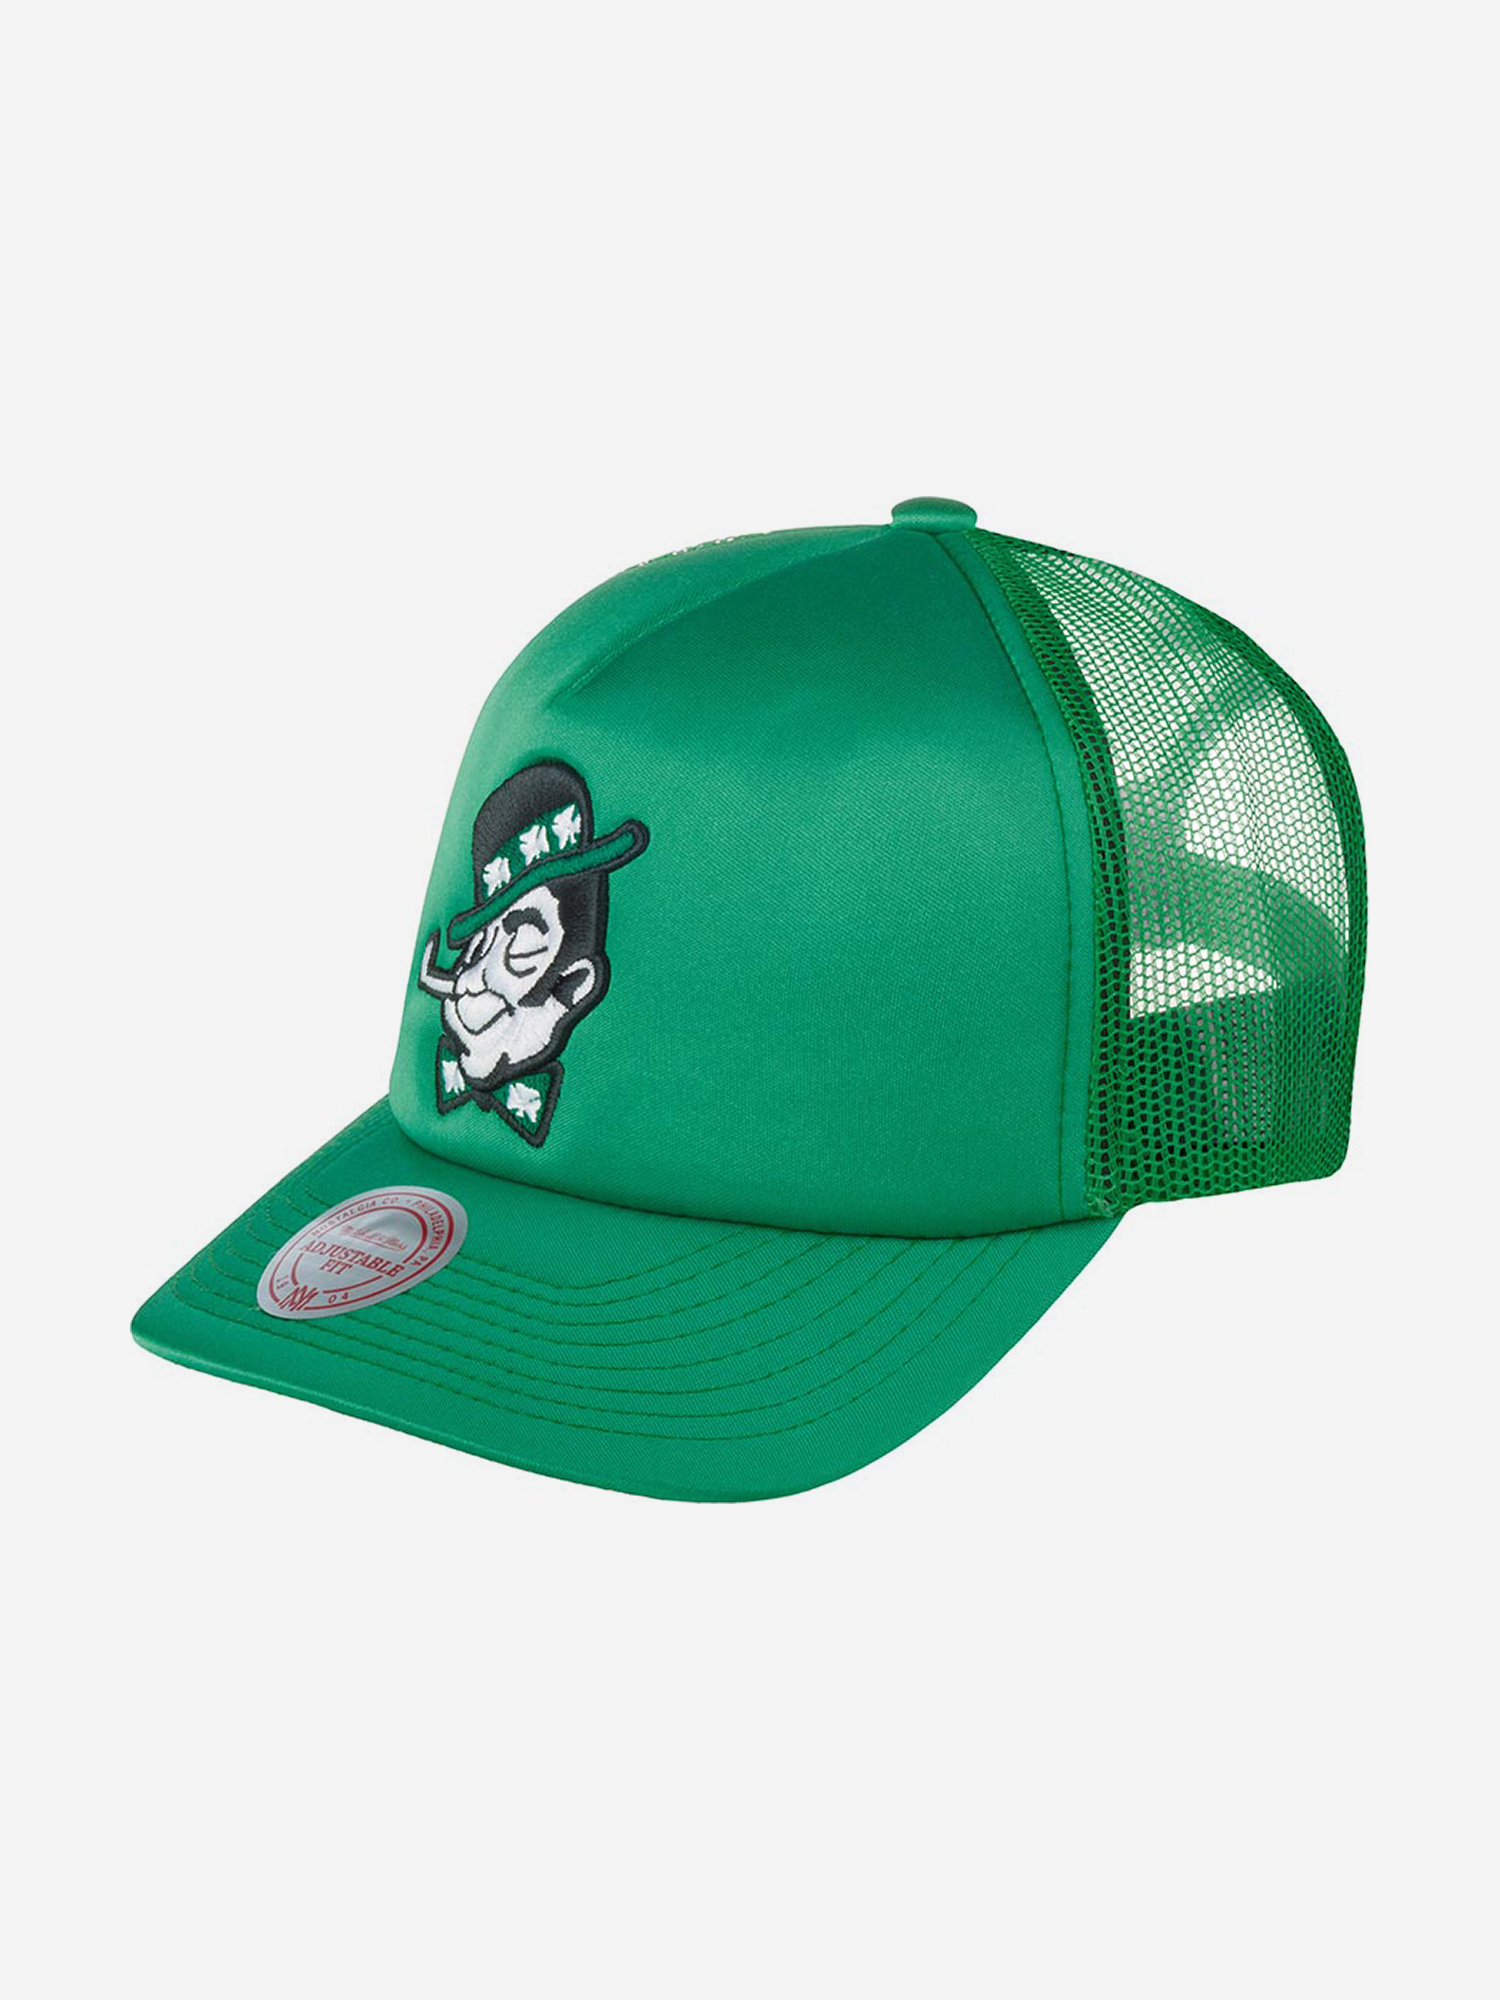 Бейсболка с сеточкой MITCHELL NESS HHSS3467-BCEYYPPPGREN Boston Celtics NBA (зеленый), Зеленый